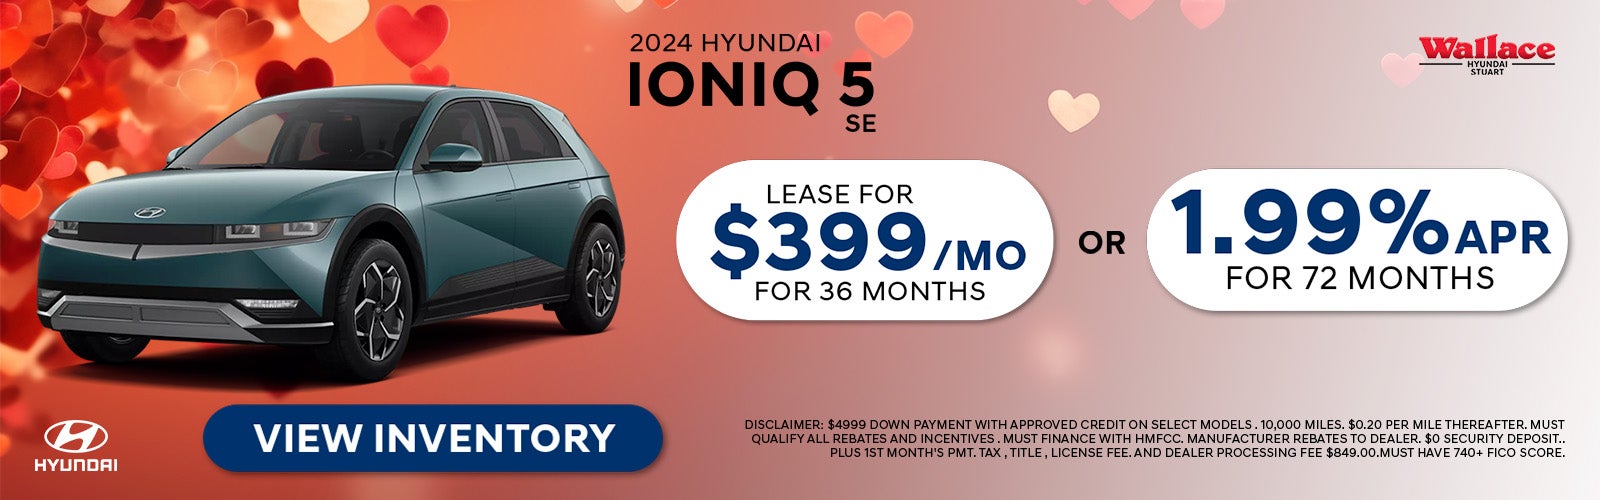 Hyundai Ioniq Special Offer